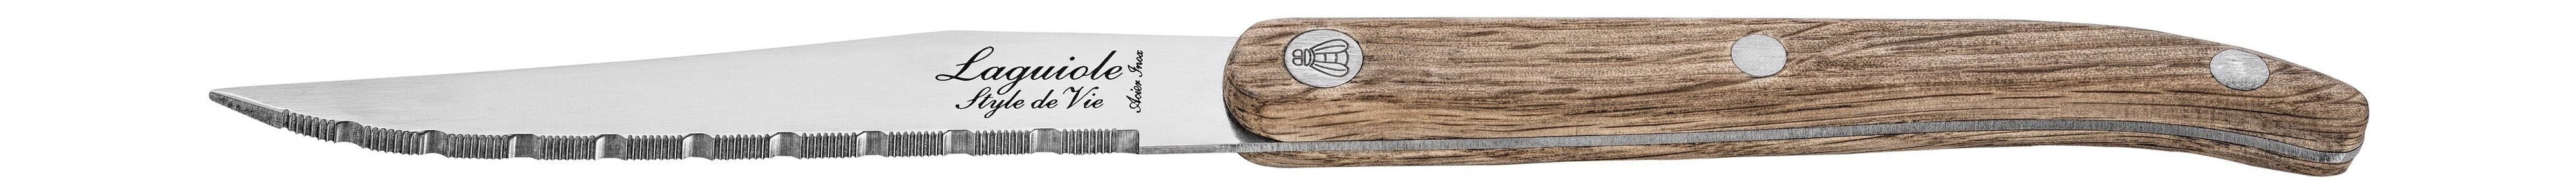 Style de vie Authenque Laguile Innovation Line Kneke Knives 6 pezzi Set di quercia, lama seghettata